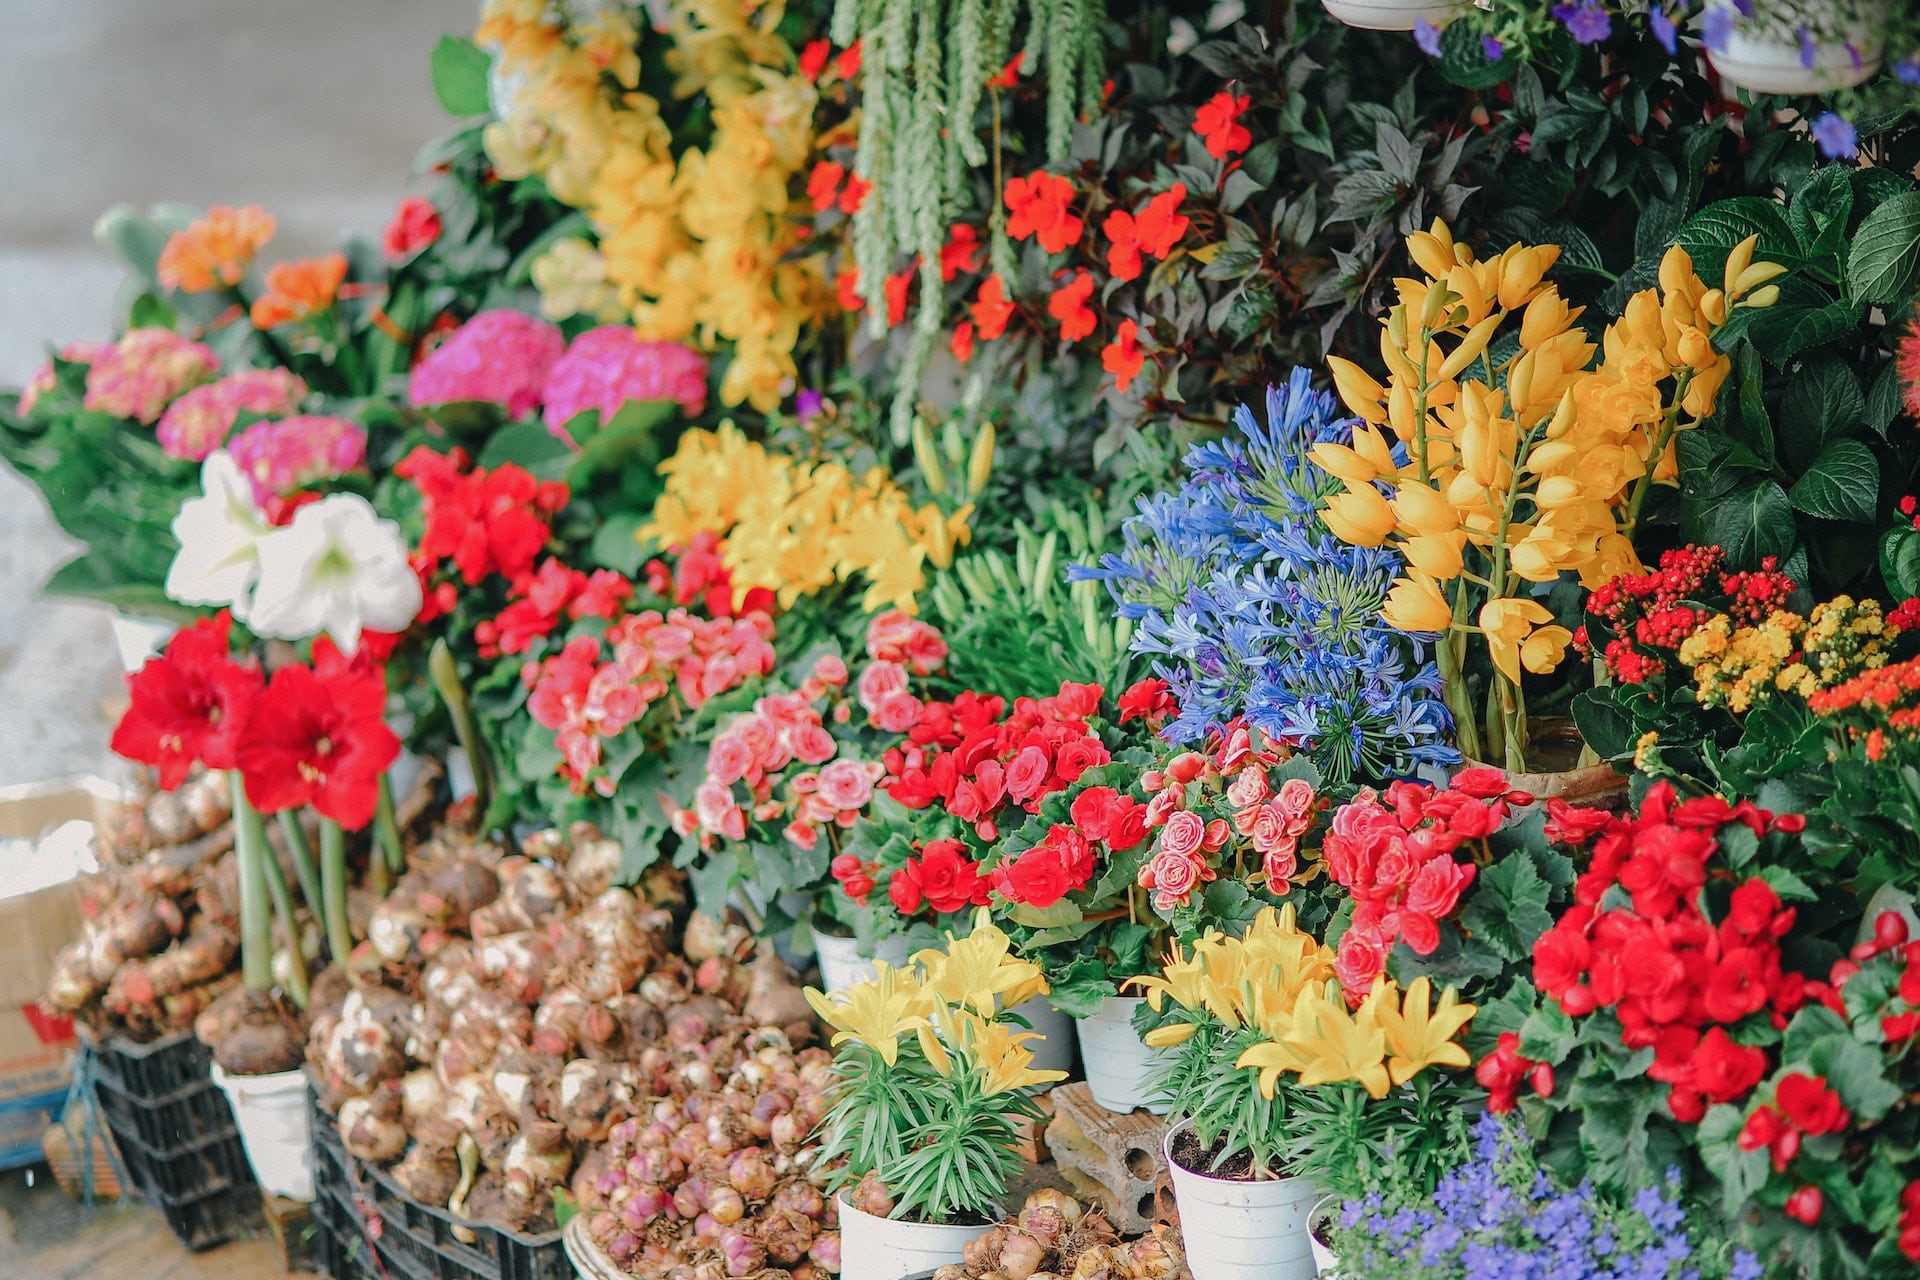 A legszebb budapesti virágboltok